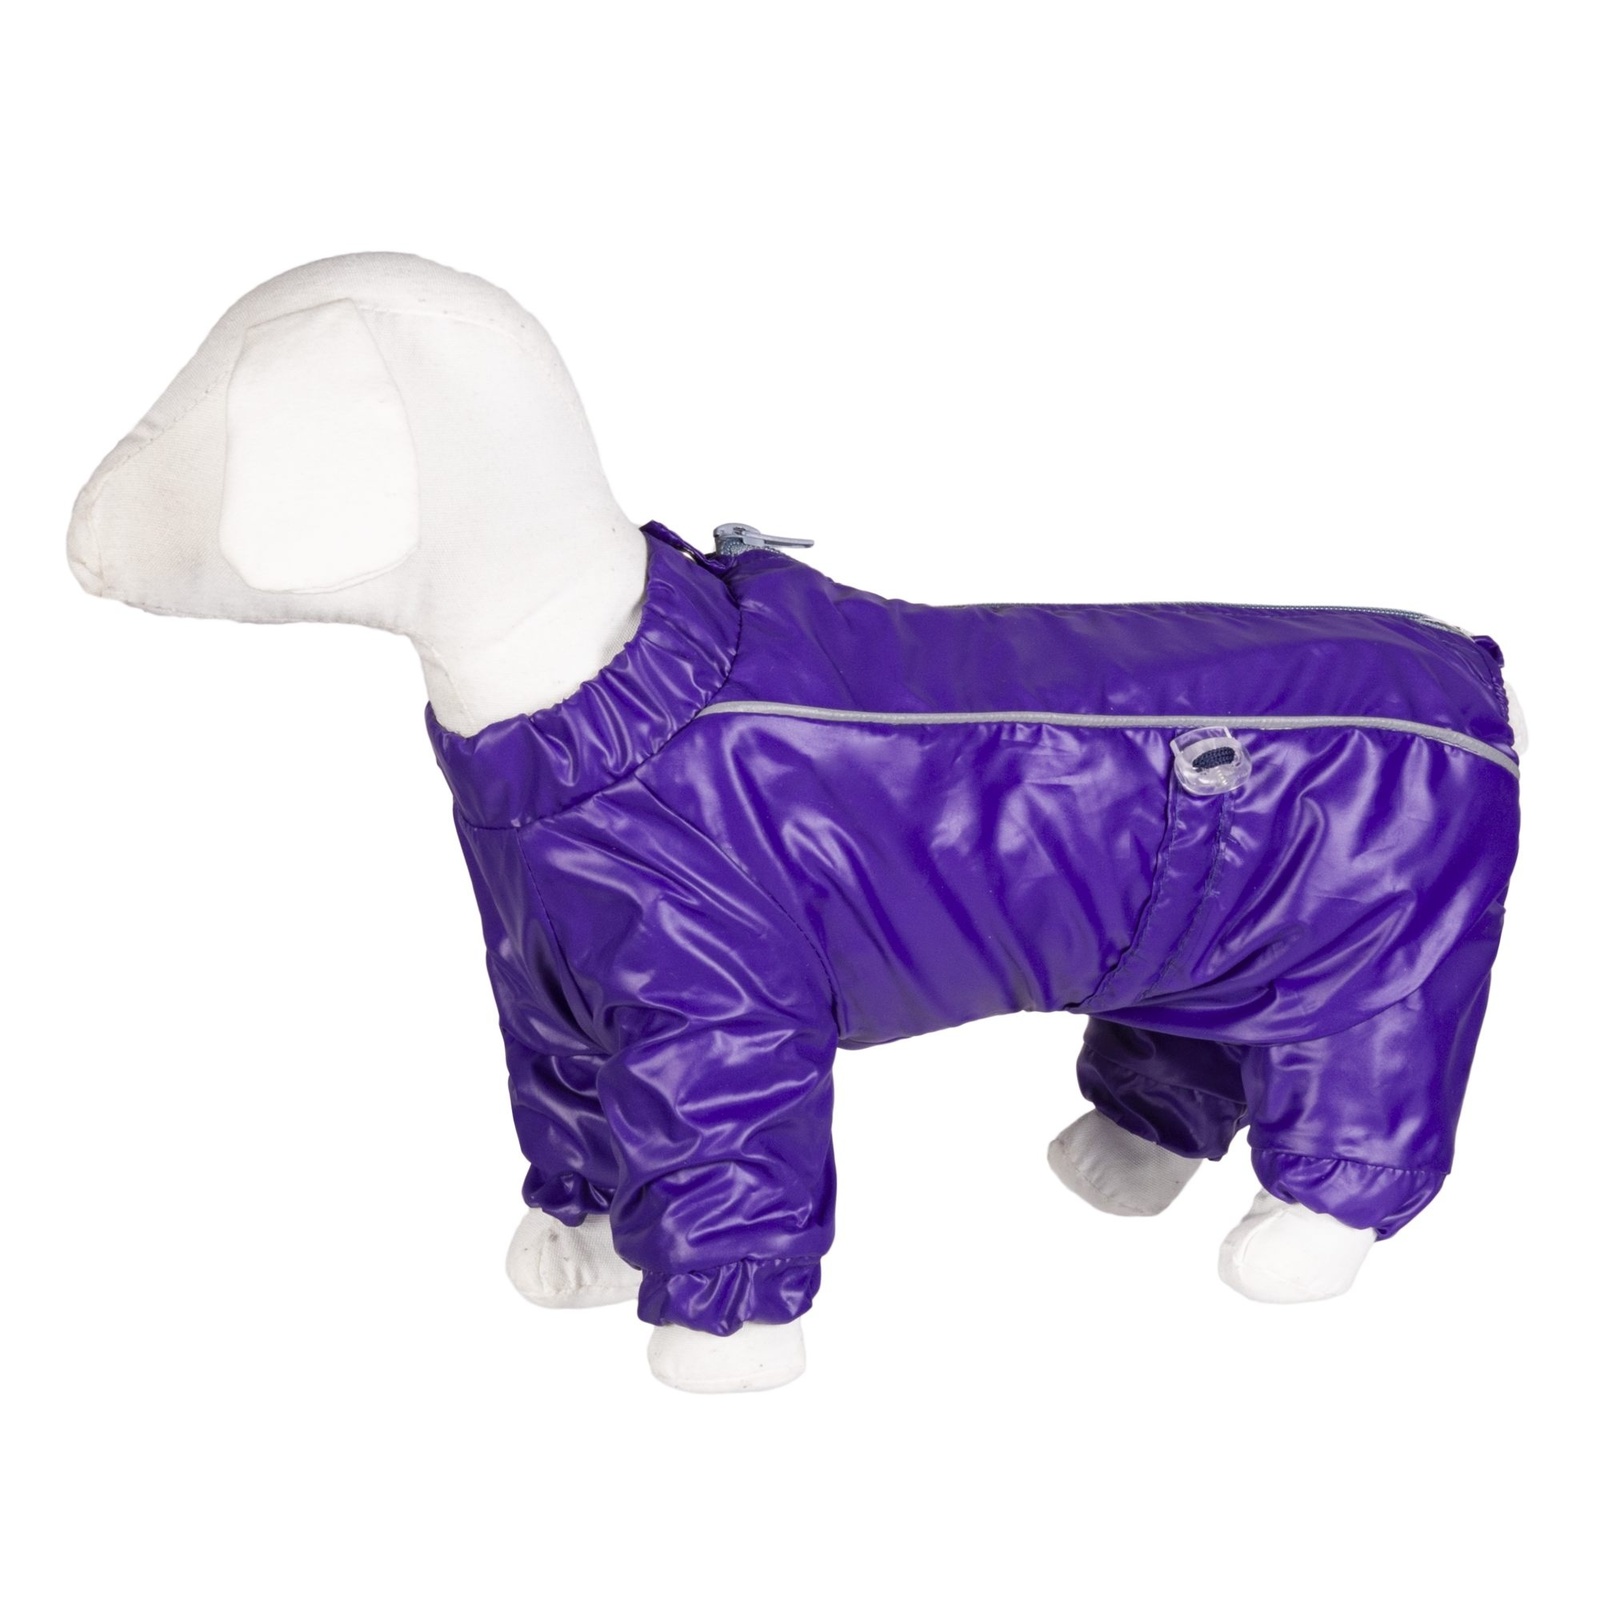 Yami-Yami одежда комбинезон для собак малых пород, фиолетовый на флисе (L/3) Yami-Yami одежда комбинезон для собак малых пород, фиолетовый на флисе (L/3) - фото 1